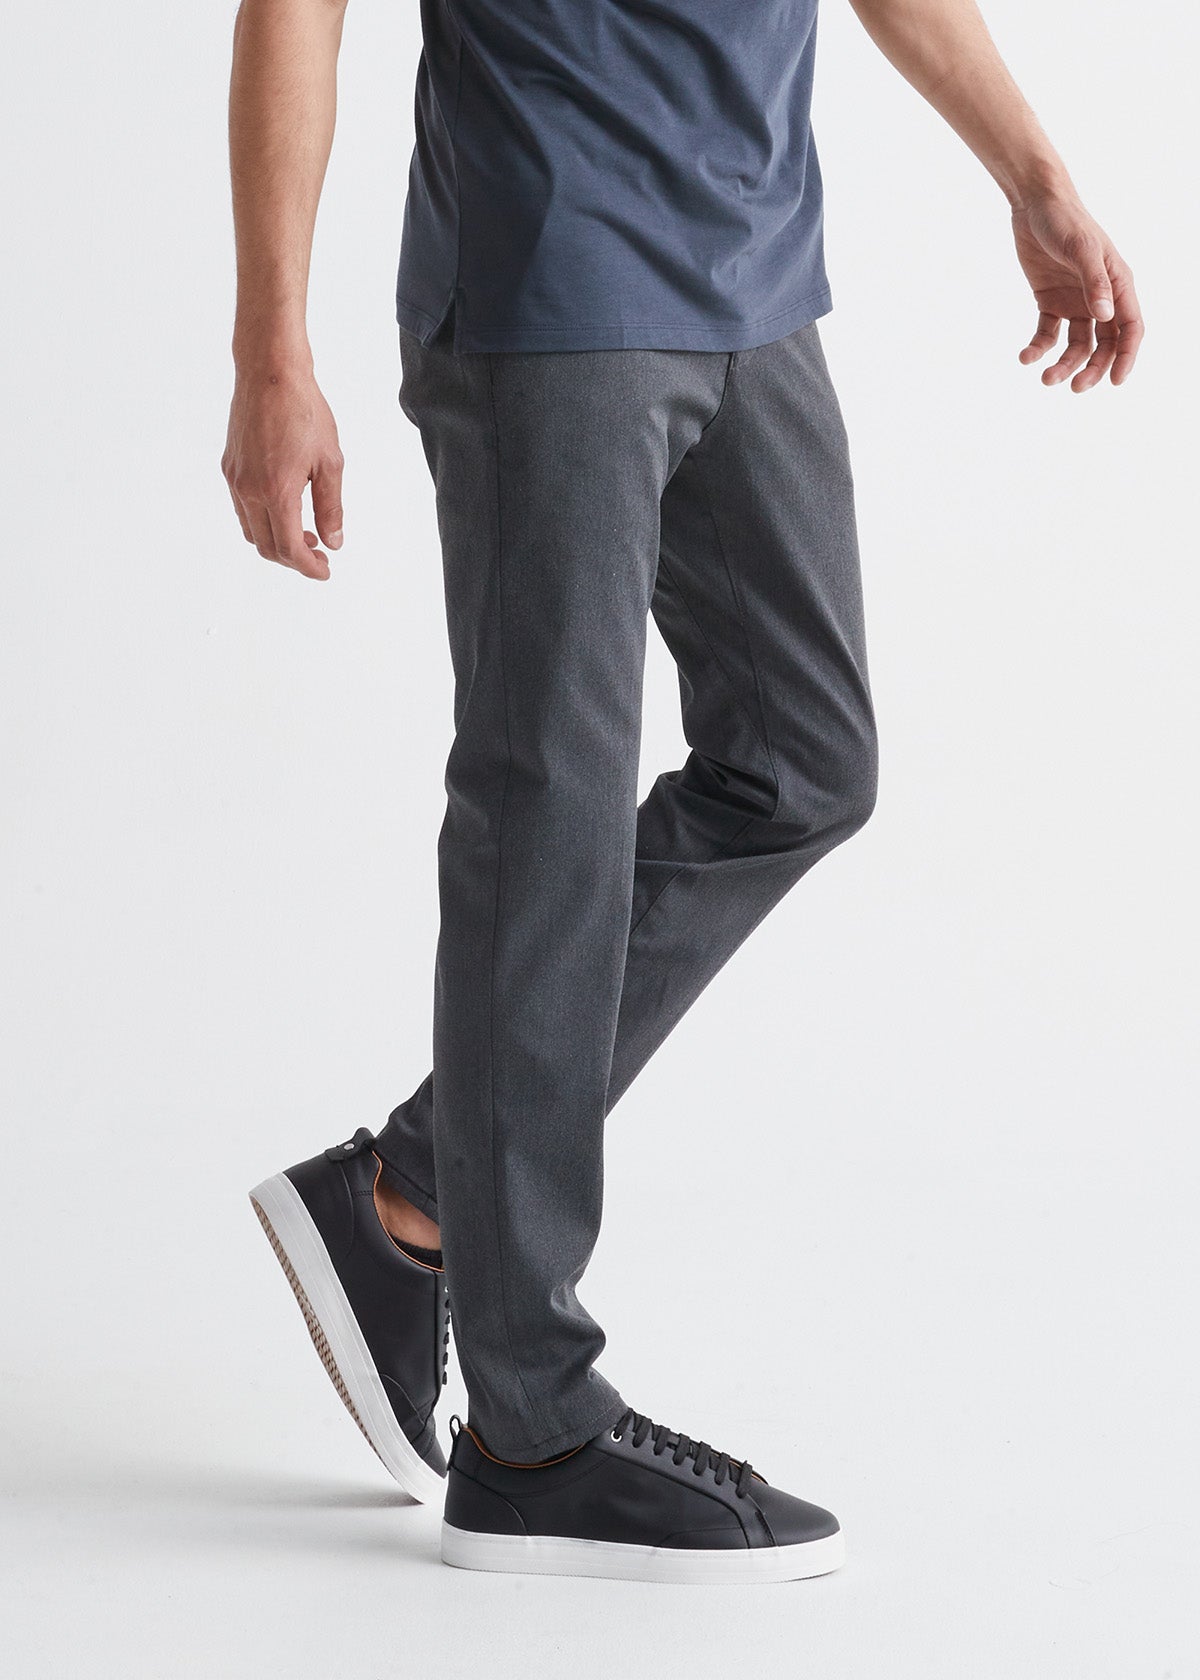 Men's Inyo Stretch Pant | Sierra Designs